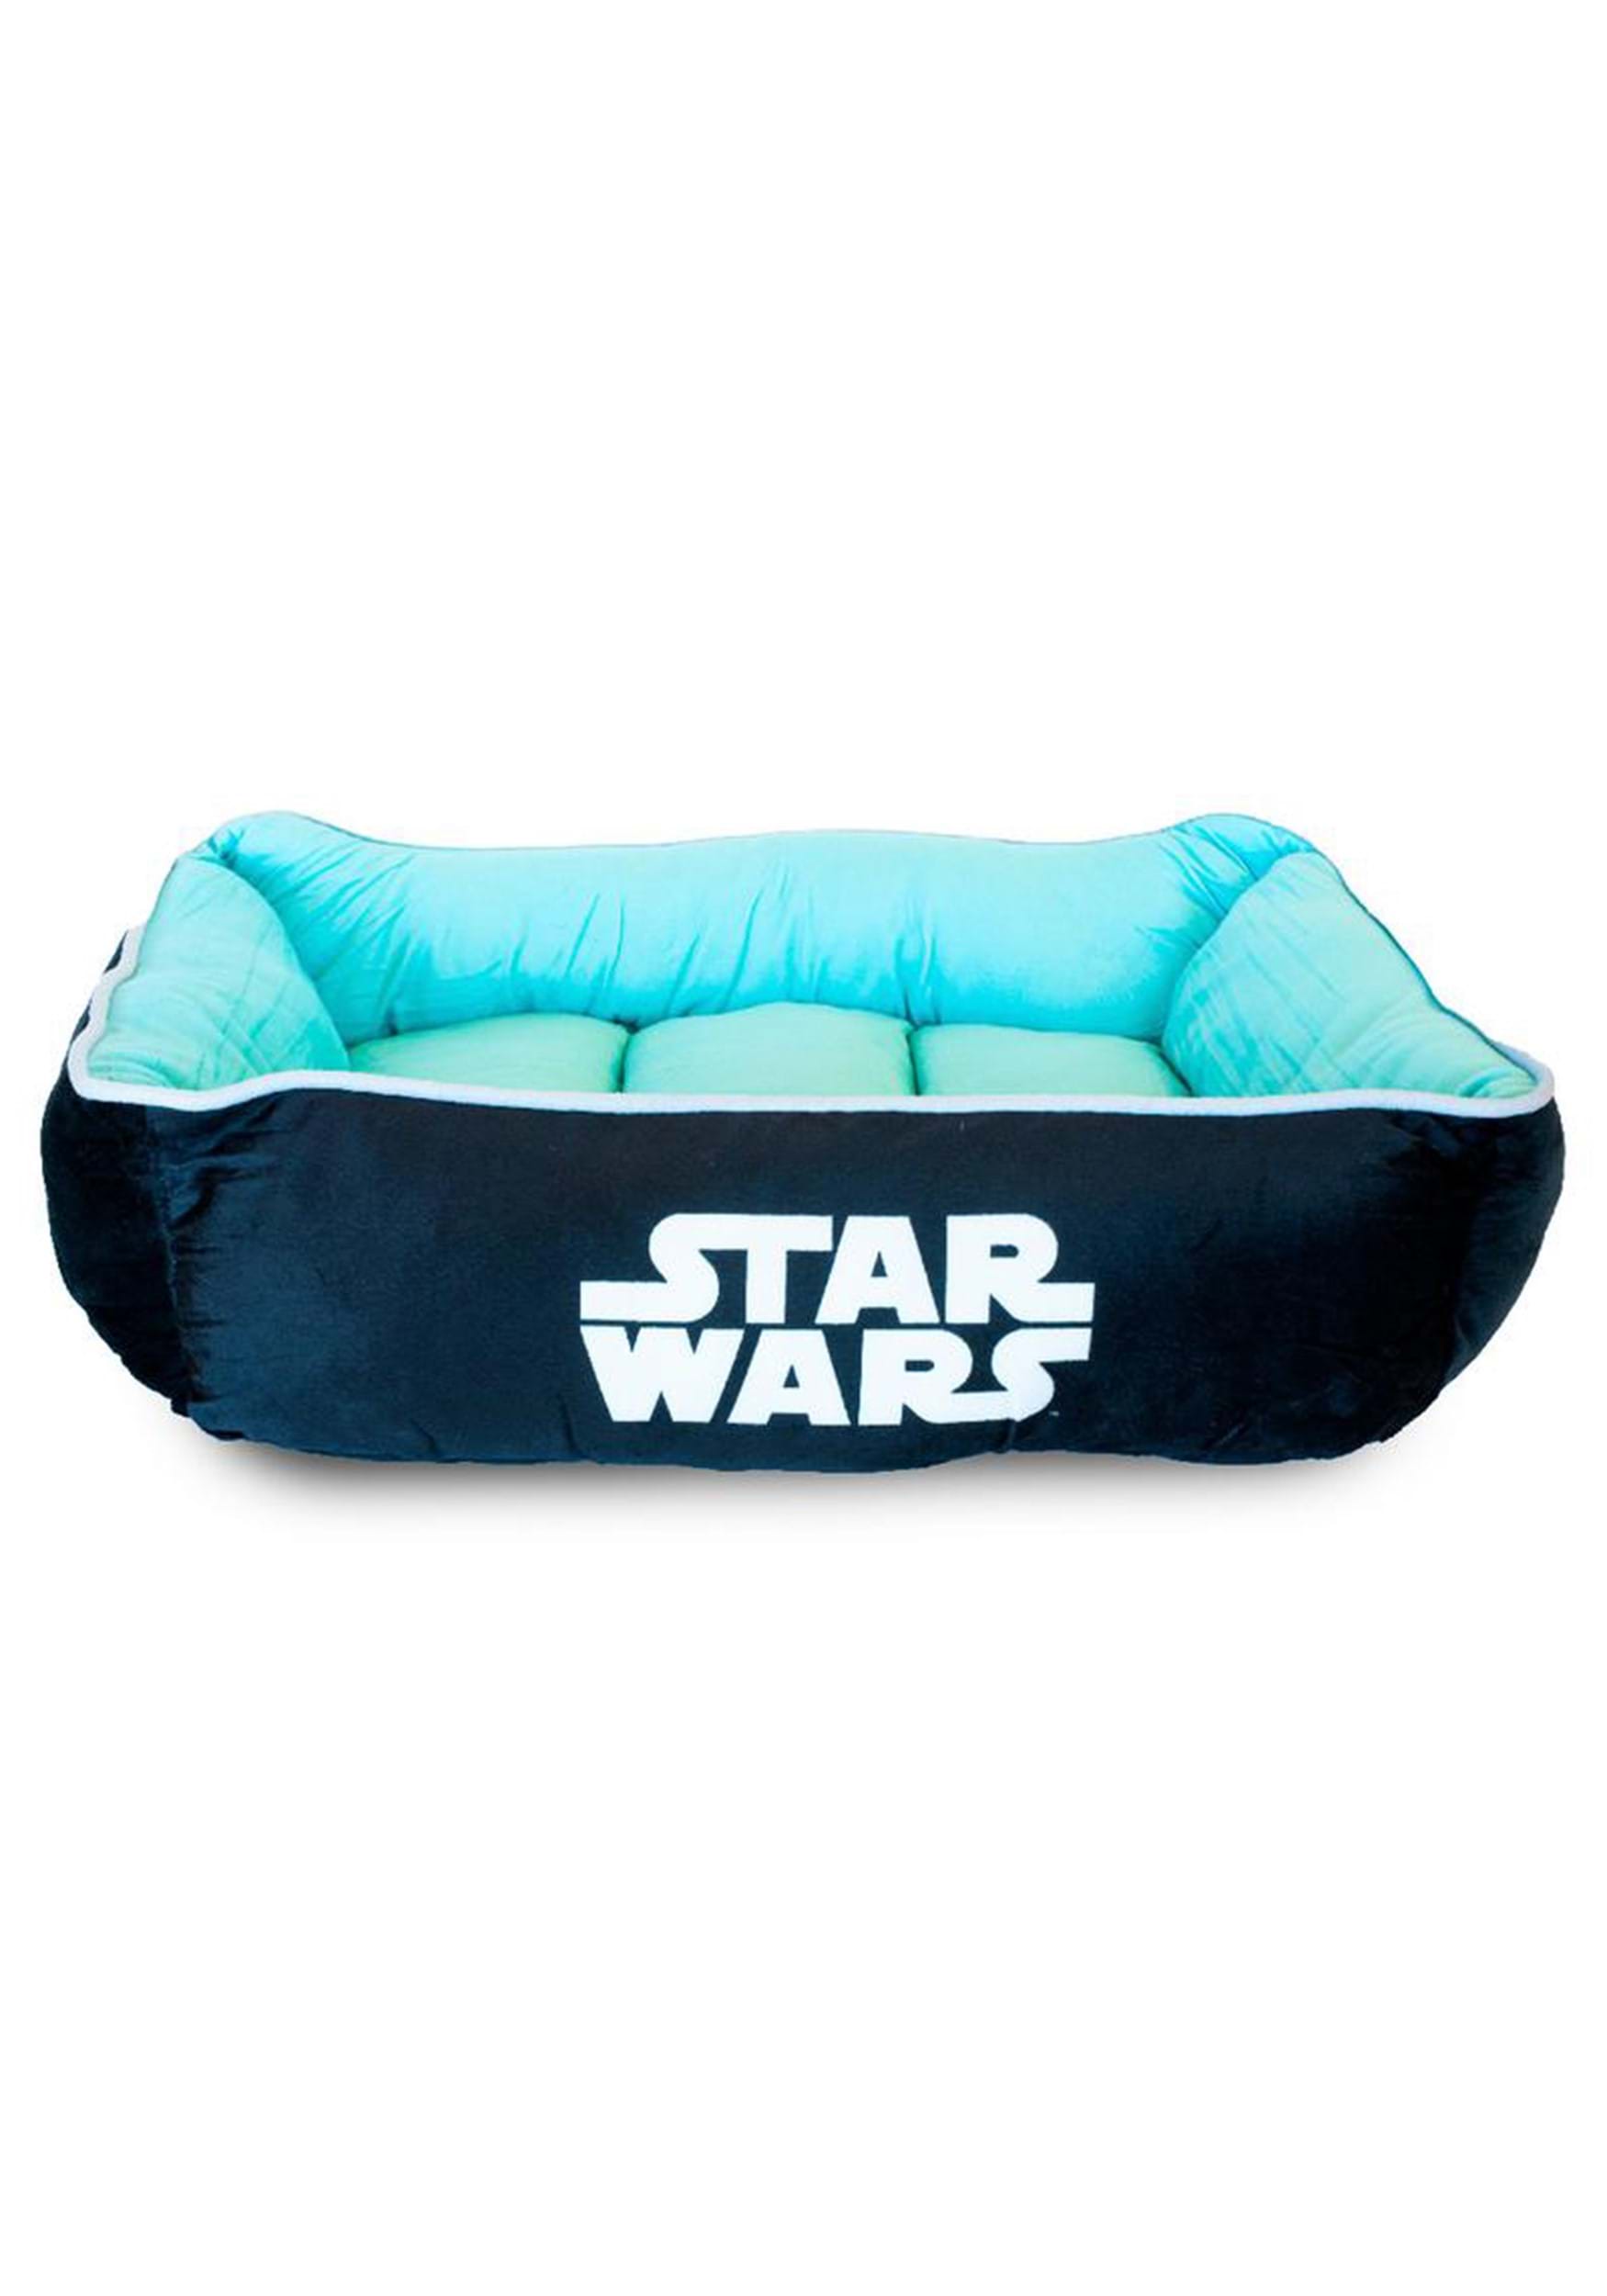 Star Wars Imperial Fleet Aqua And Black Dog Bed